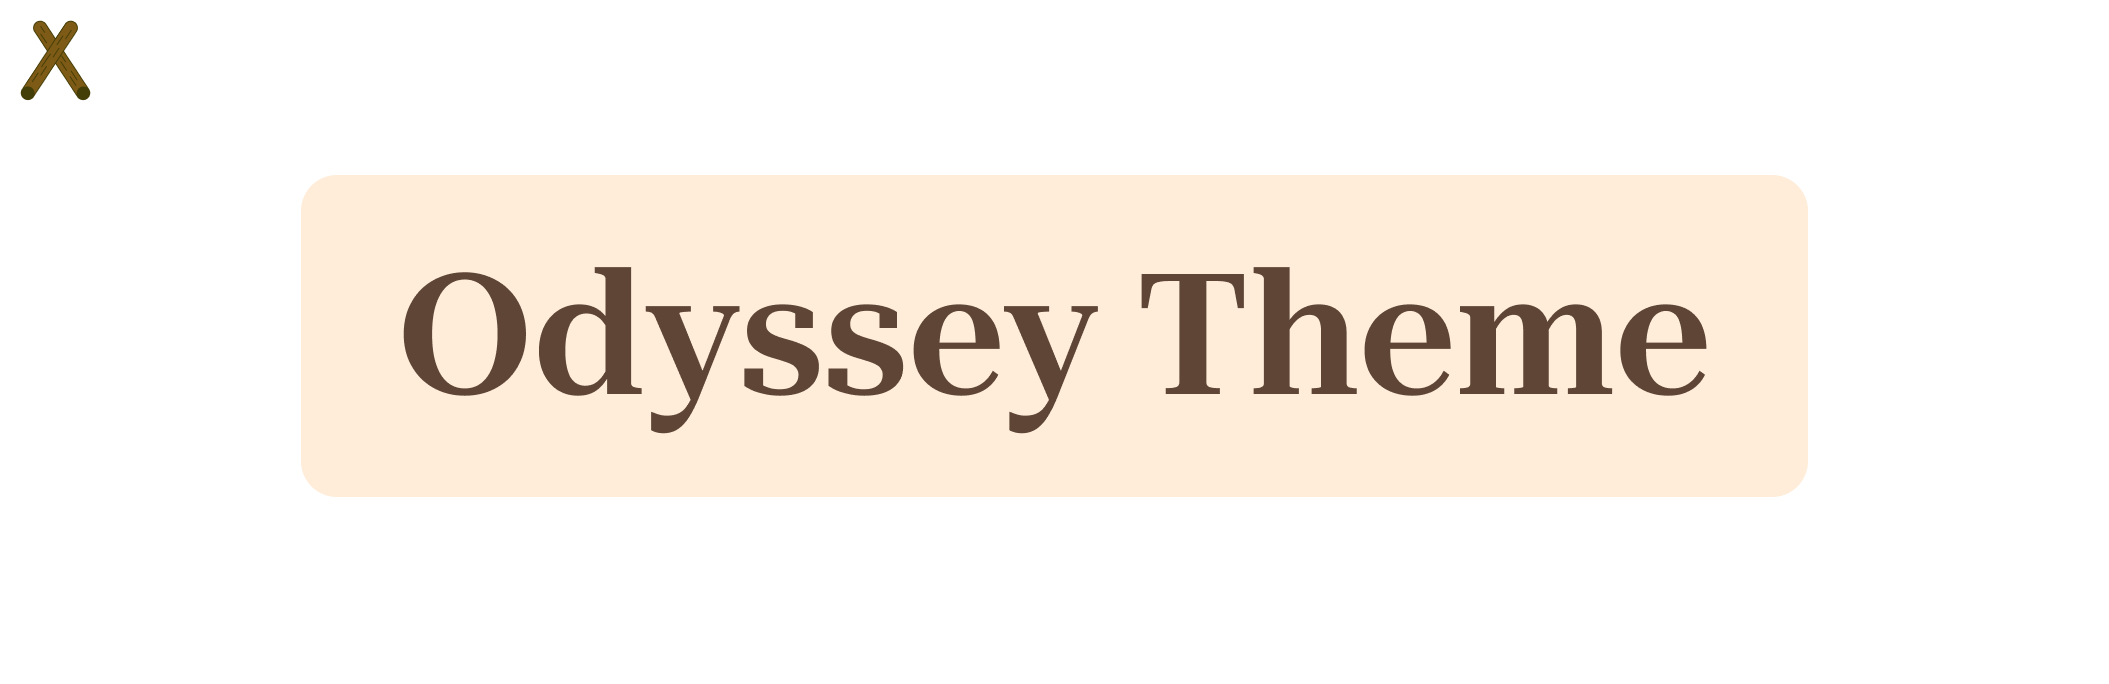 Odyssey Theme Banner